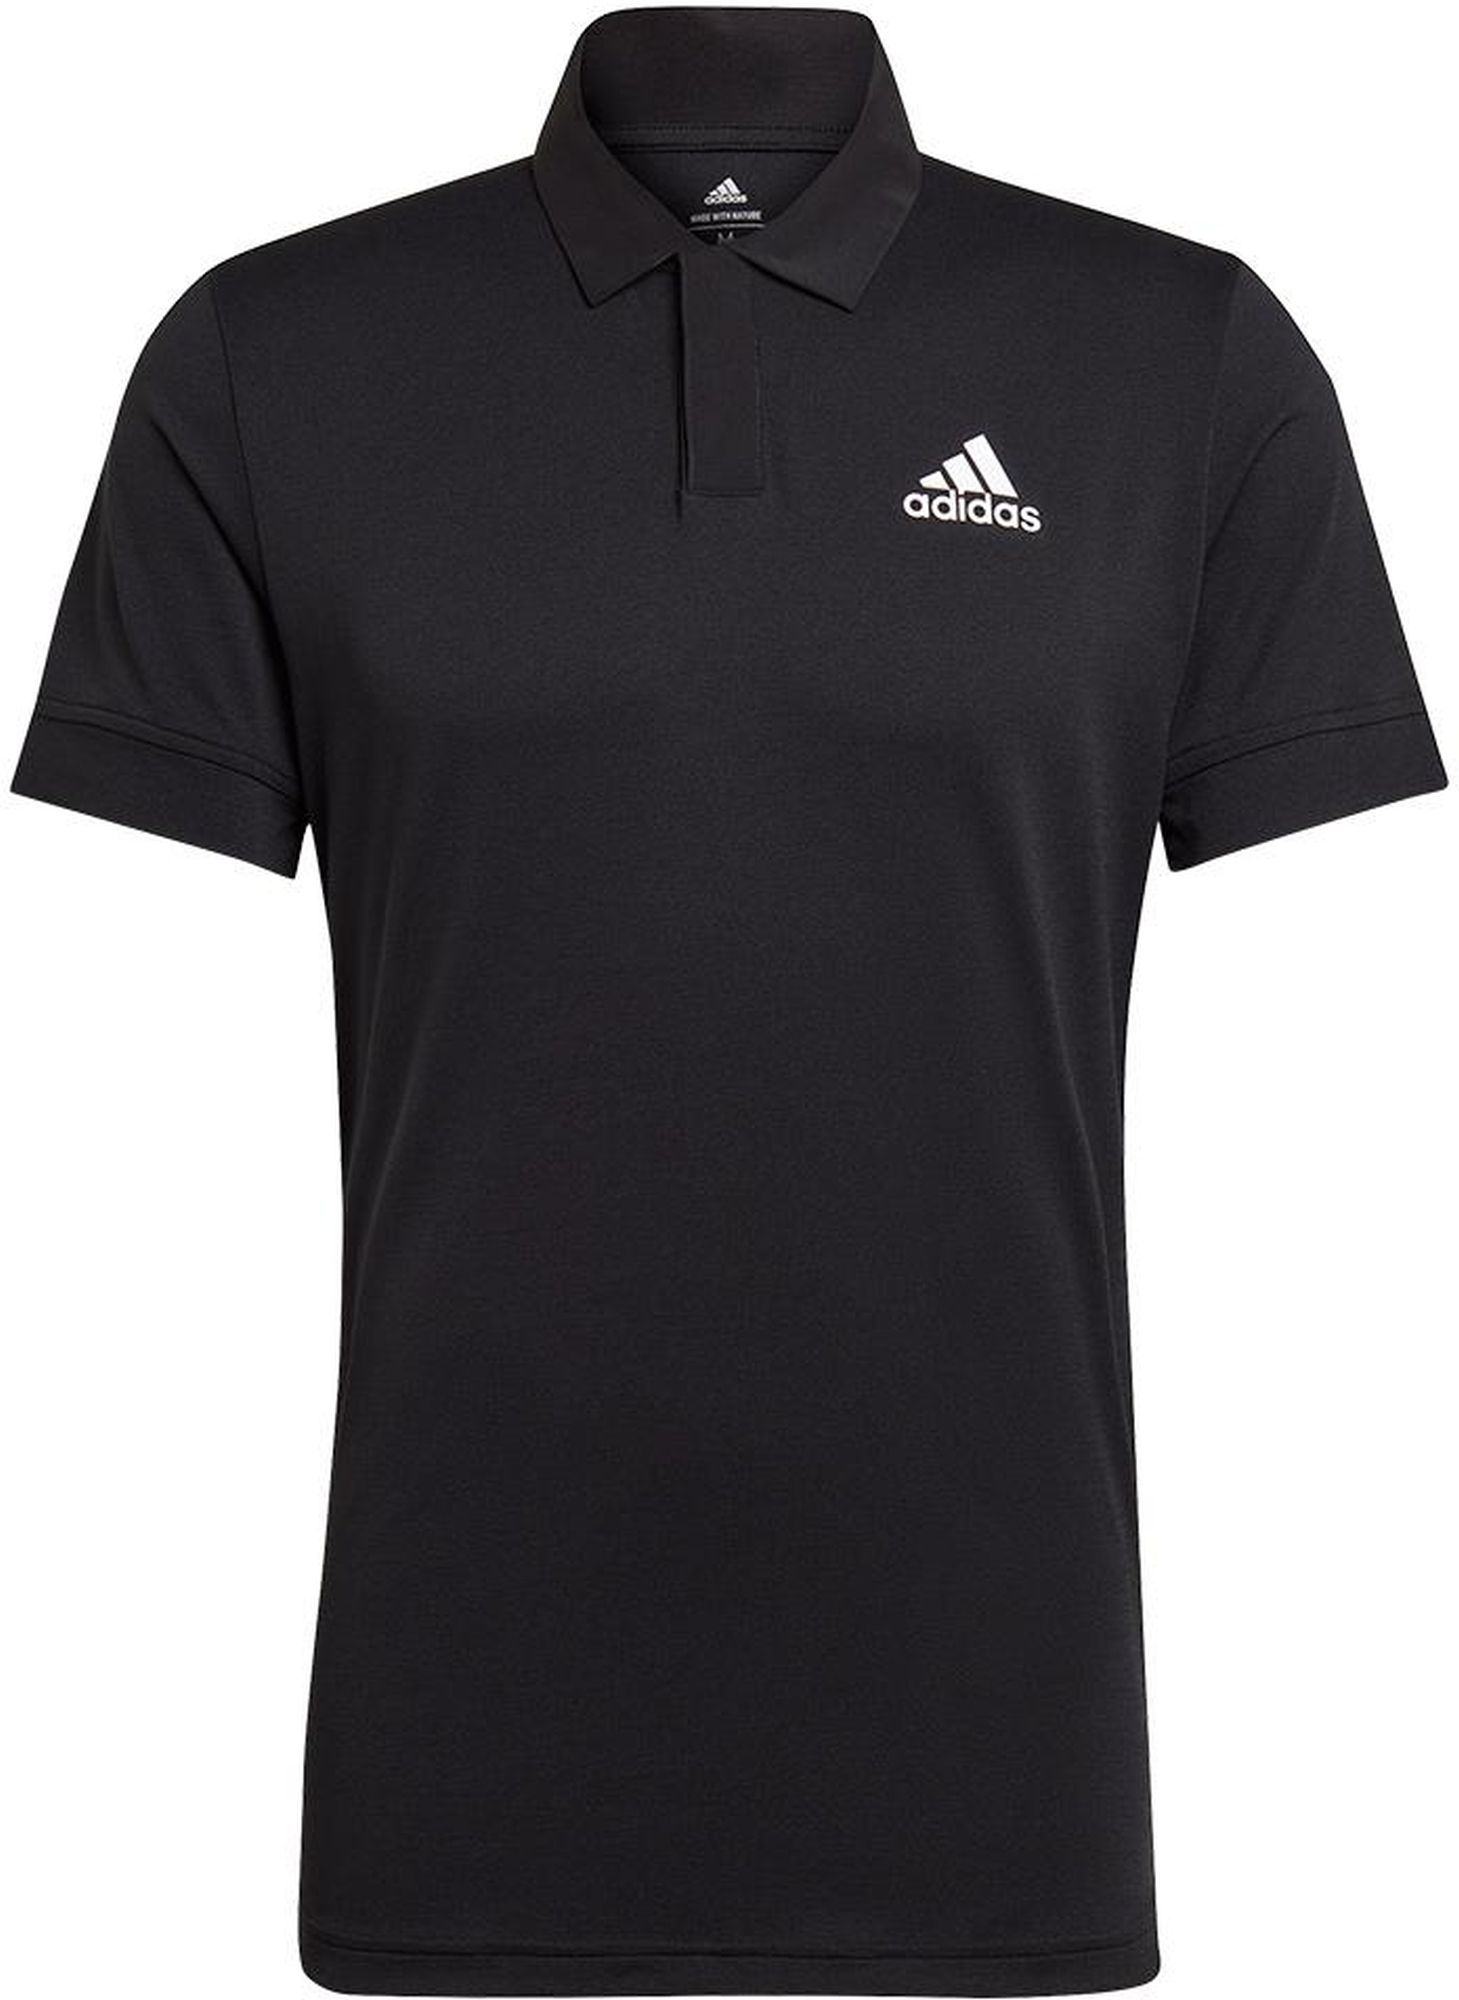 Adidas Men's Tennis FreeLift Polo Shirt (Black)